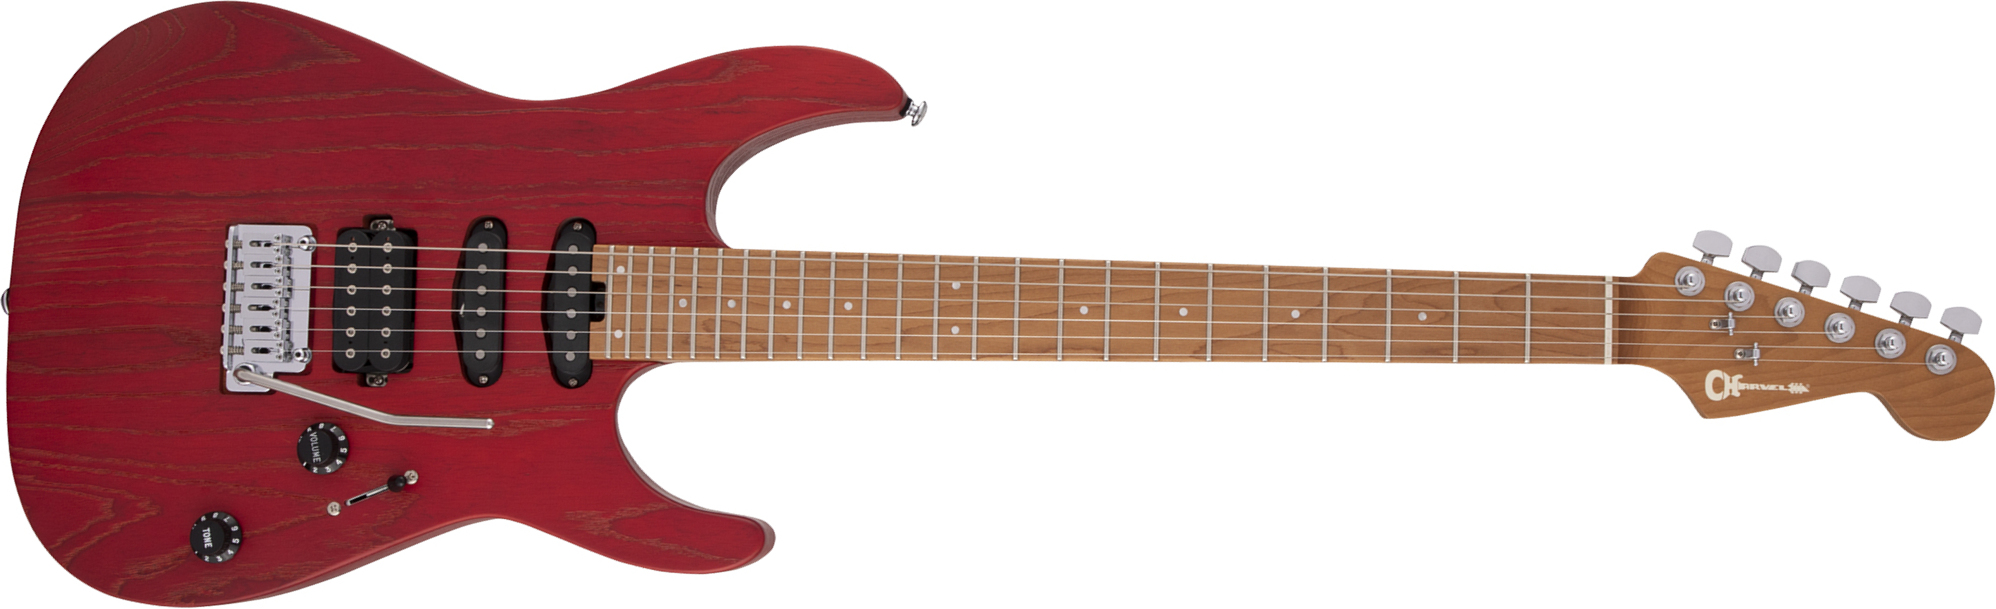 Charvel Dinky Dk24 Hss 2pt Cm Ash Pro-mod Seymour Duncan Trem Mn - Red Ash - E-Gitarre in Str-Form - Main picture